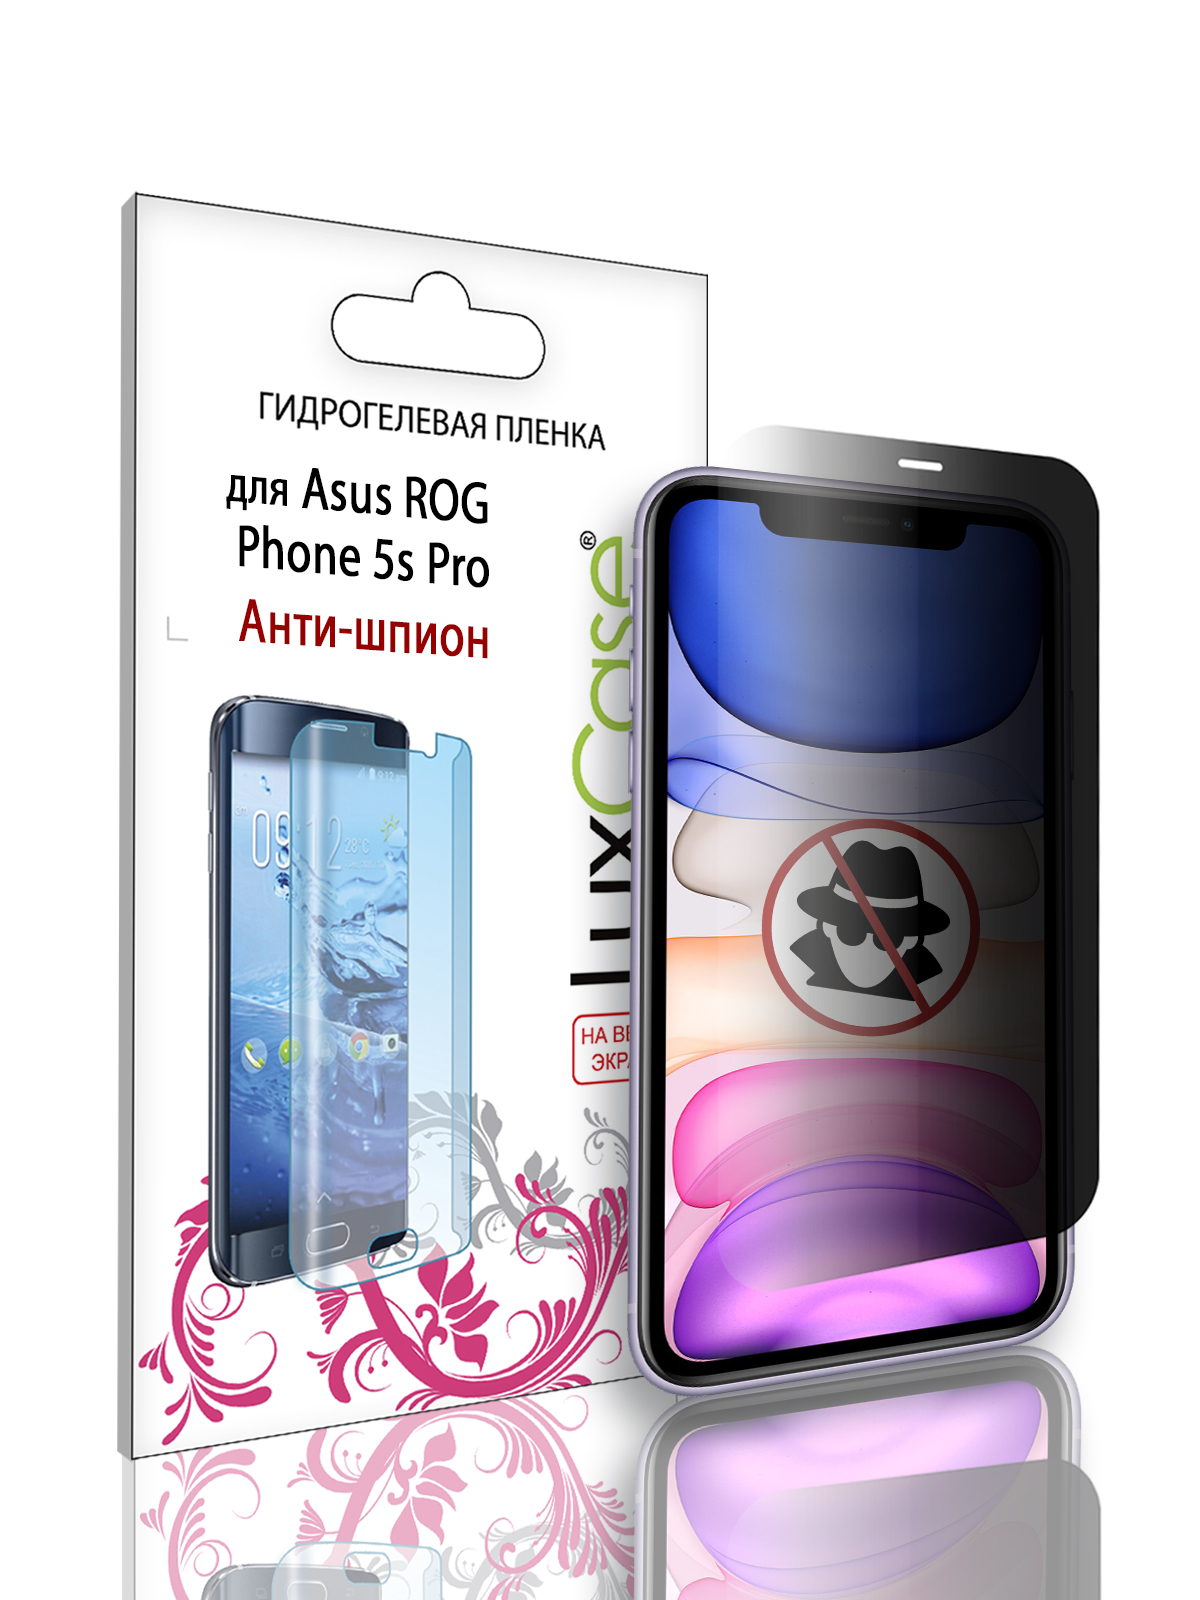 Гидрогелевая пленка LuxCase для Asus ROG Phone 5s Pro, Антишпион, 0,14 мм, Front гидрогелевая защитная пленка антишпион anty spy анти шпион для advan l5c lite матовая